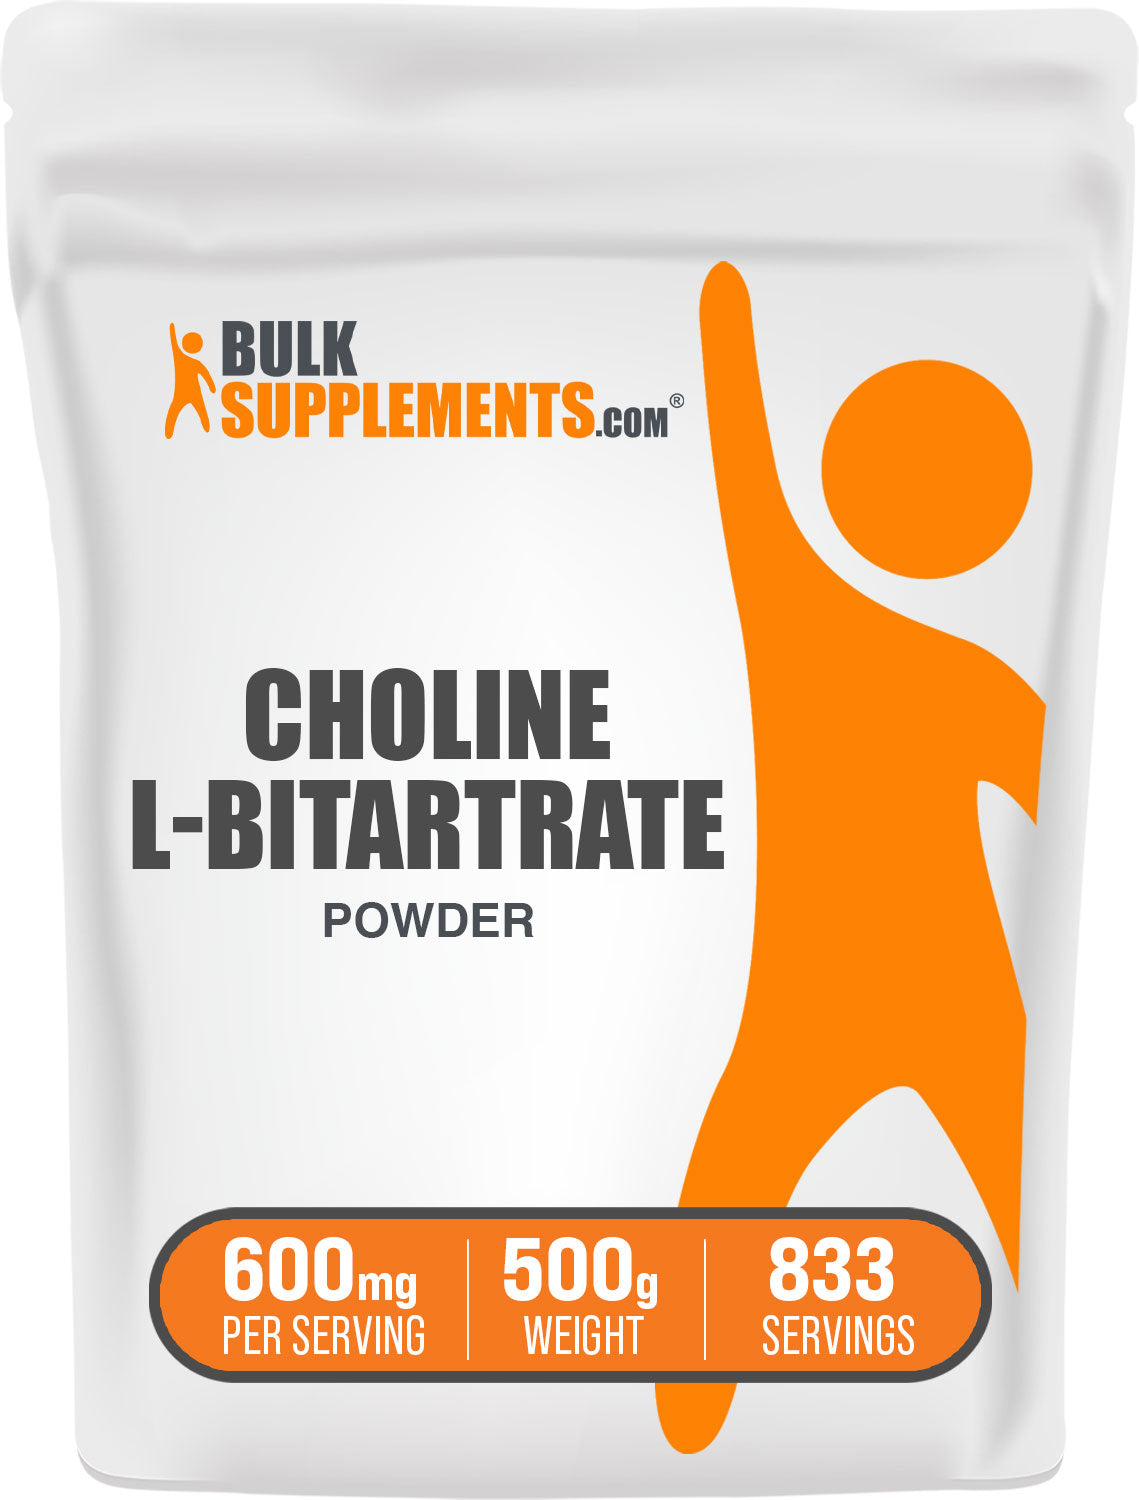 500g choline supplements